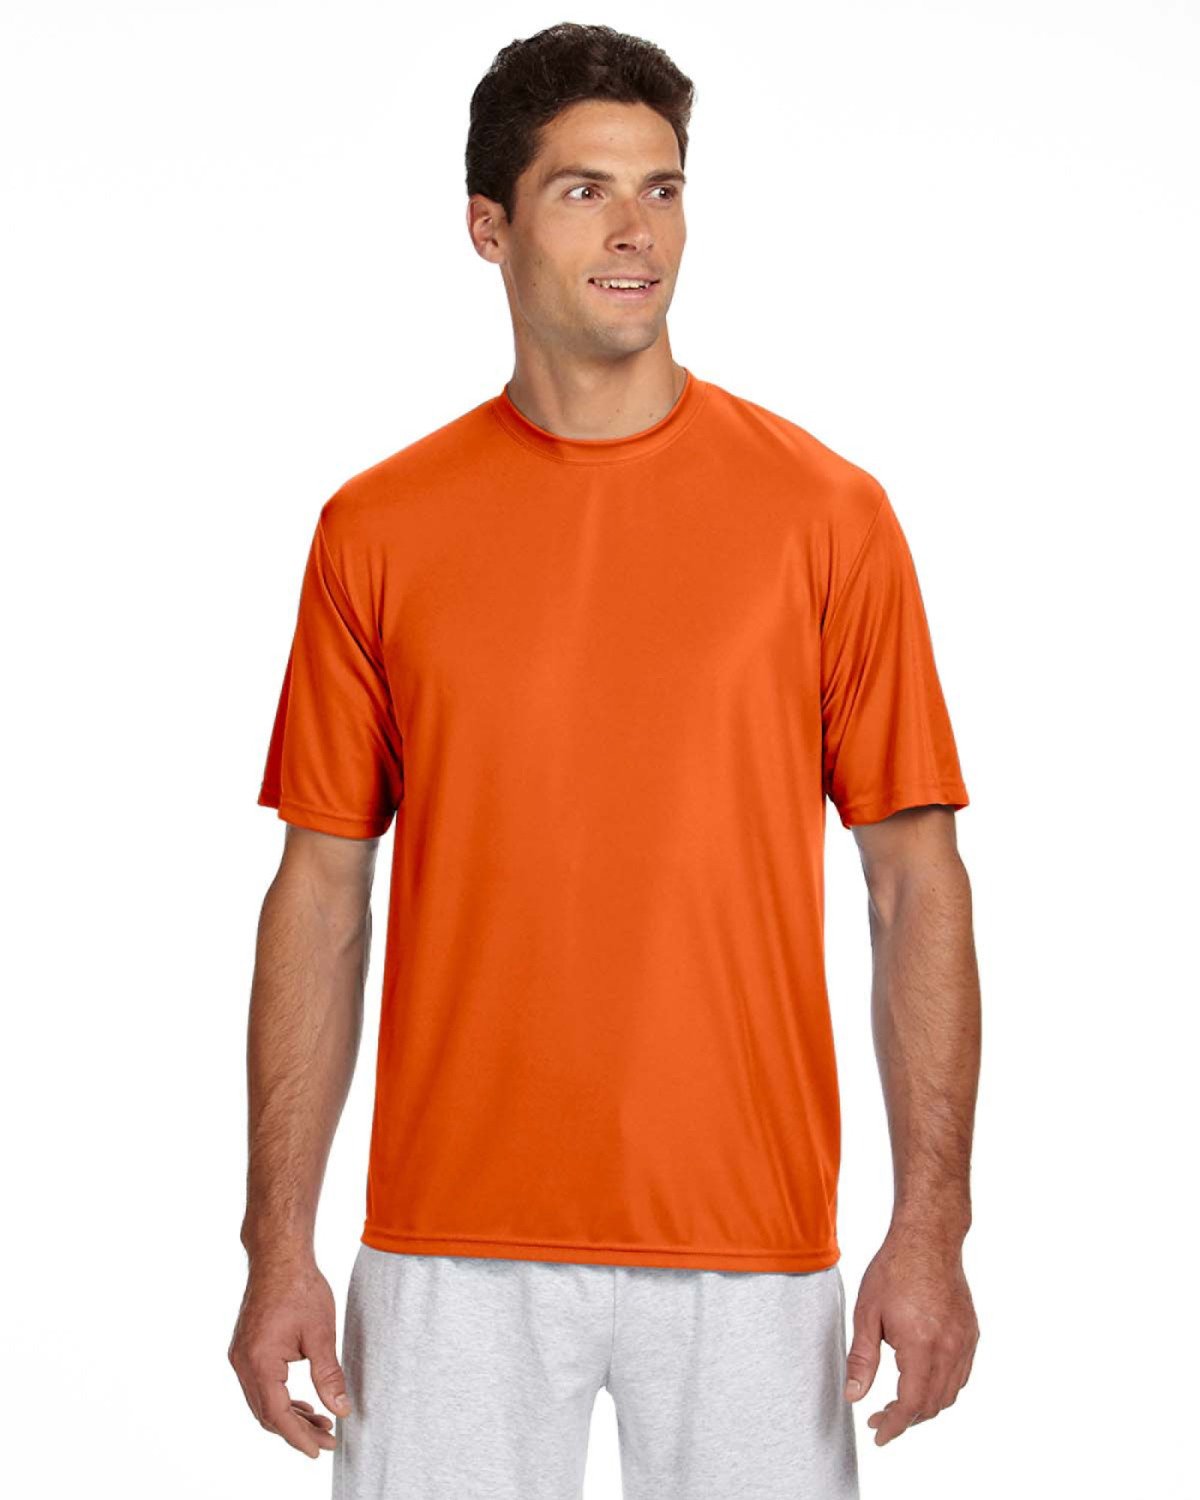 A4 Men's Cooling Performance T-Shirt ATHLETIC ORANGE 